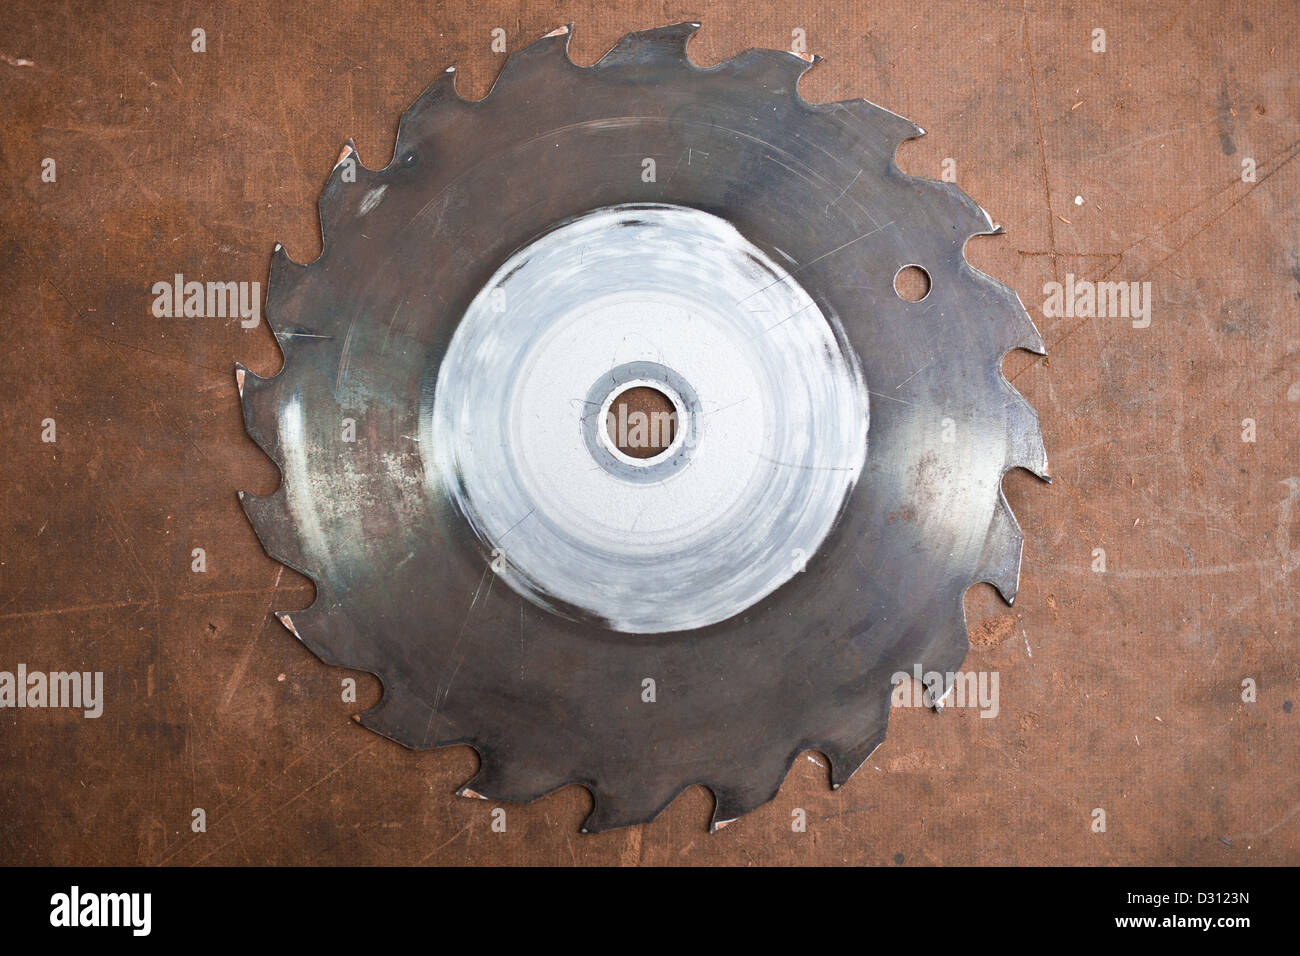 A metal, rusty, circular saw blade on a brown table top. Stock Photo